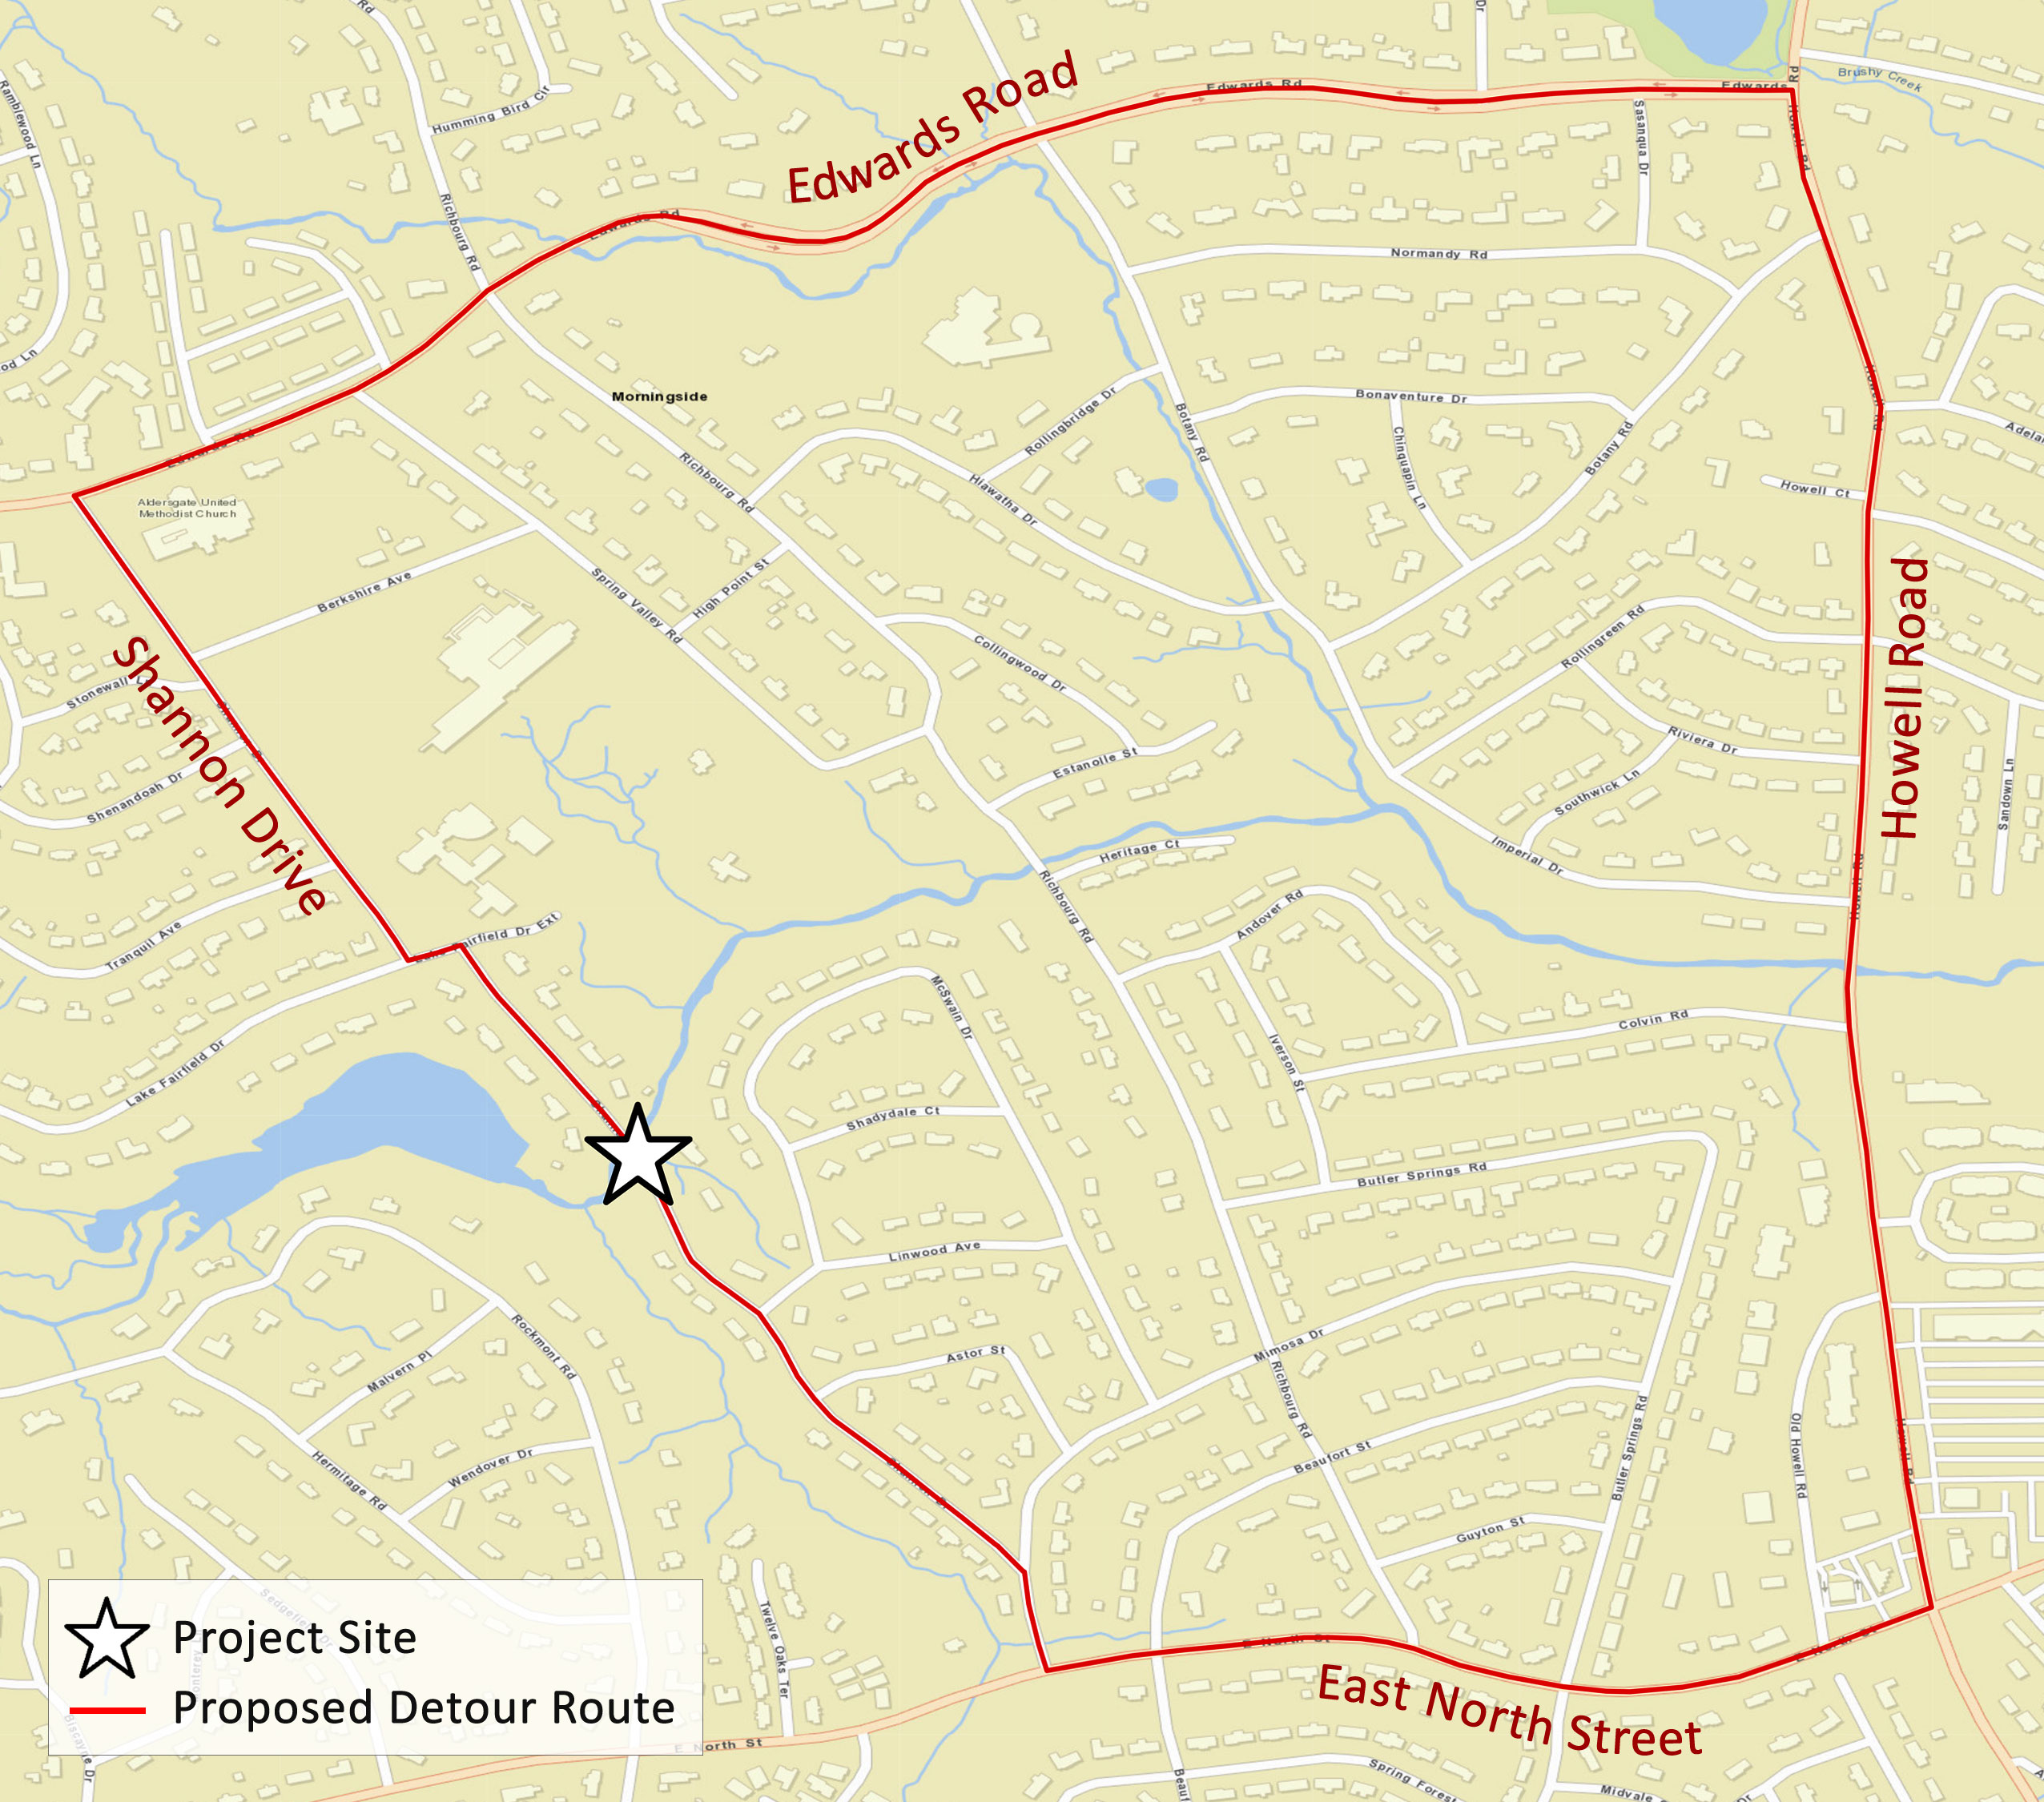 Detour map of project area